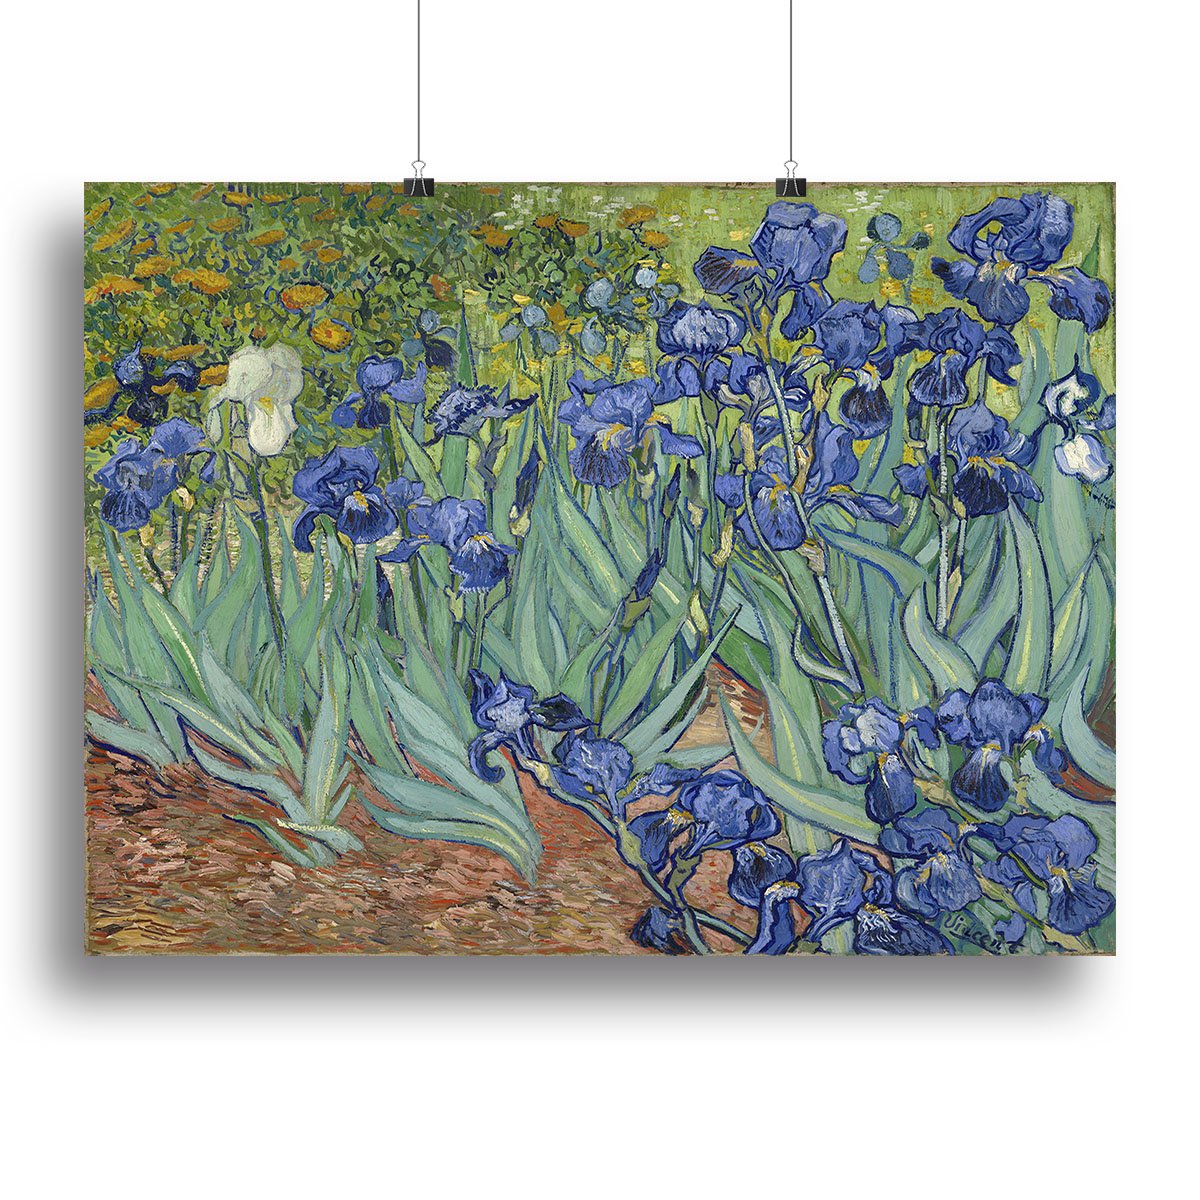 Irises by Van Gogh Canvas Print or Poster